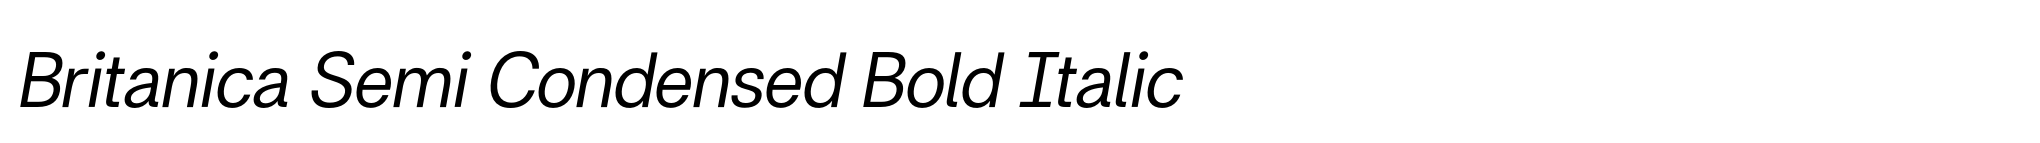 Britanica Semi Condensed Bold Italic image